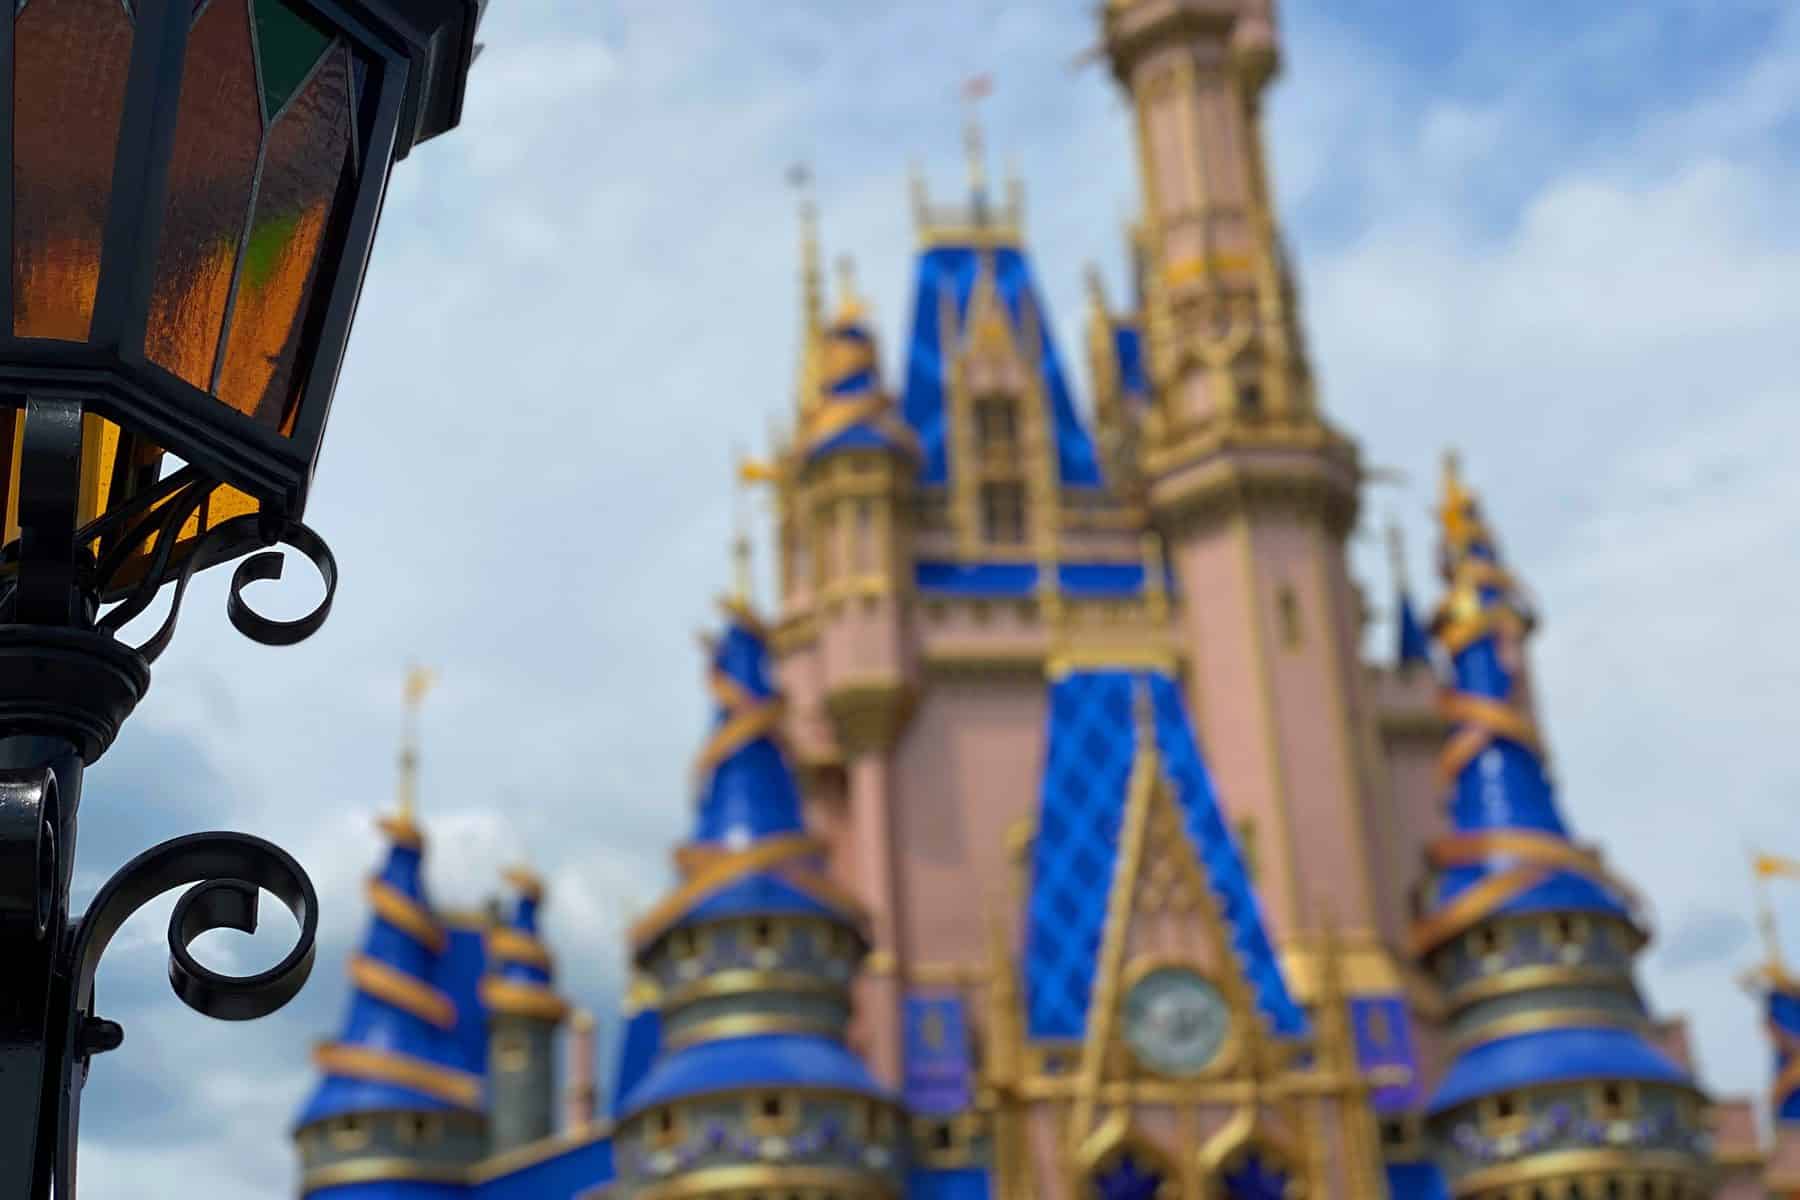 Best Days to Visit Each Park at Disney World